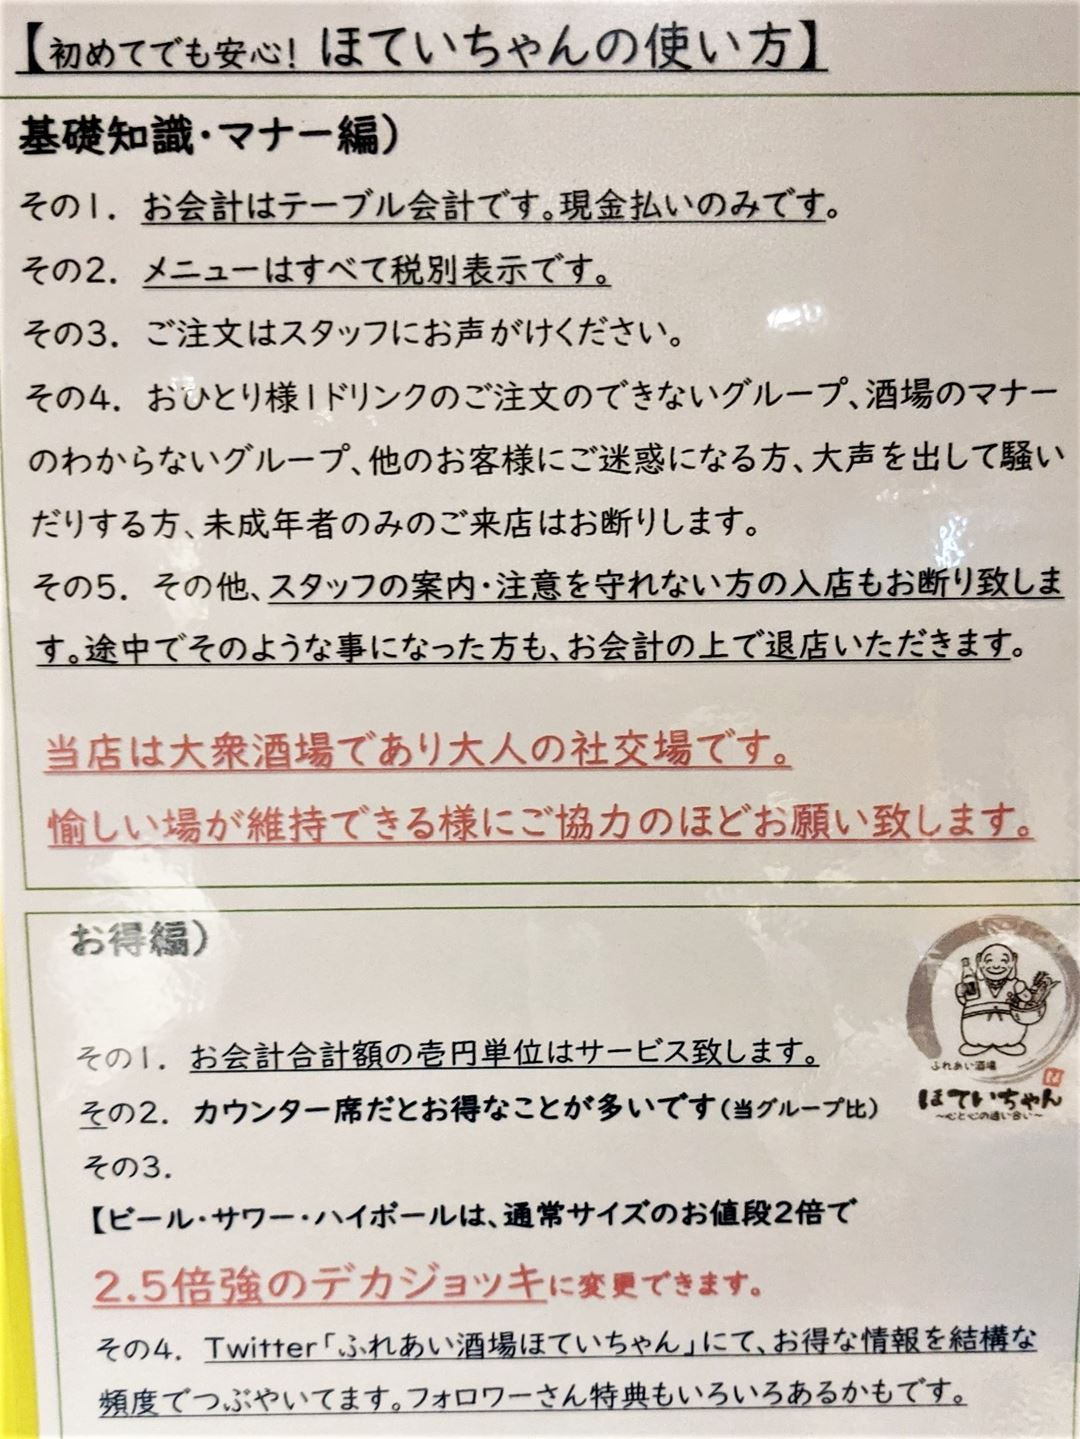 Menu メニュー Hoteichan ほていちゃん上野4号店 居酒屋